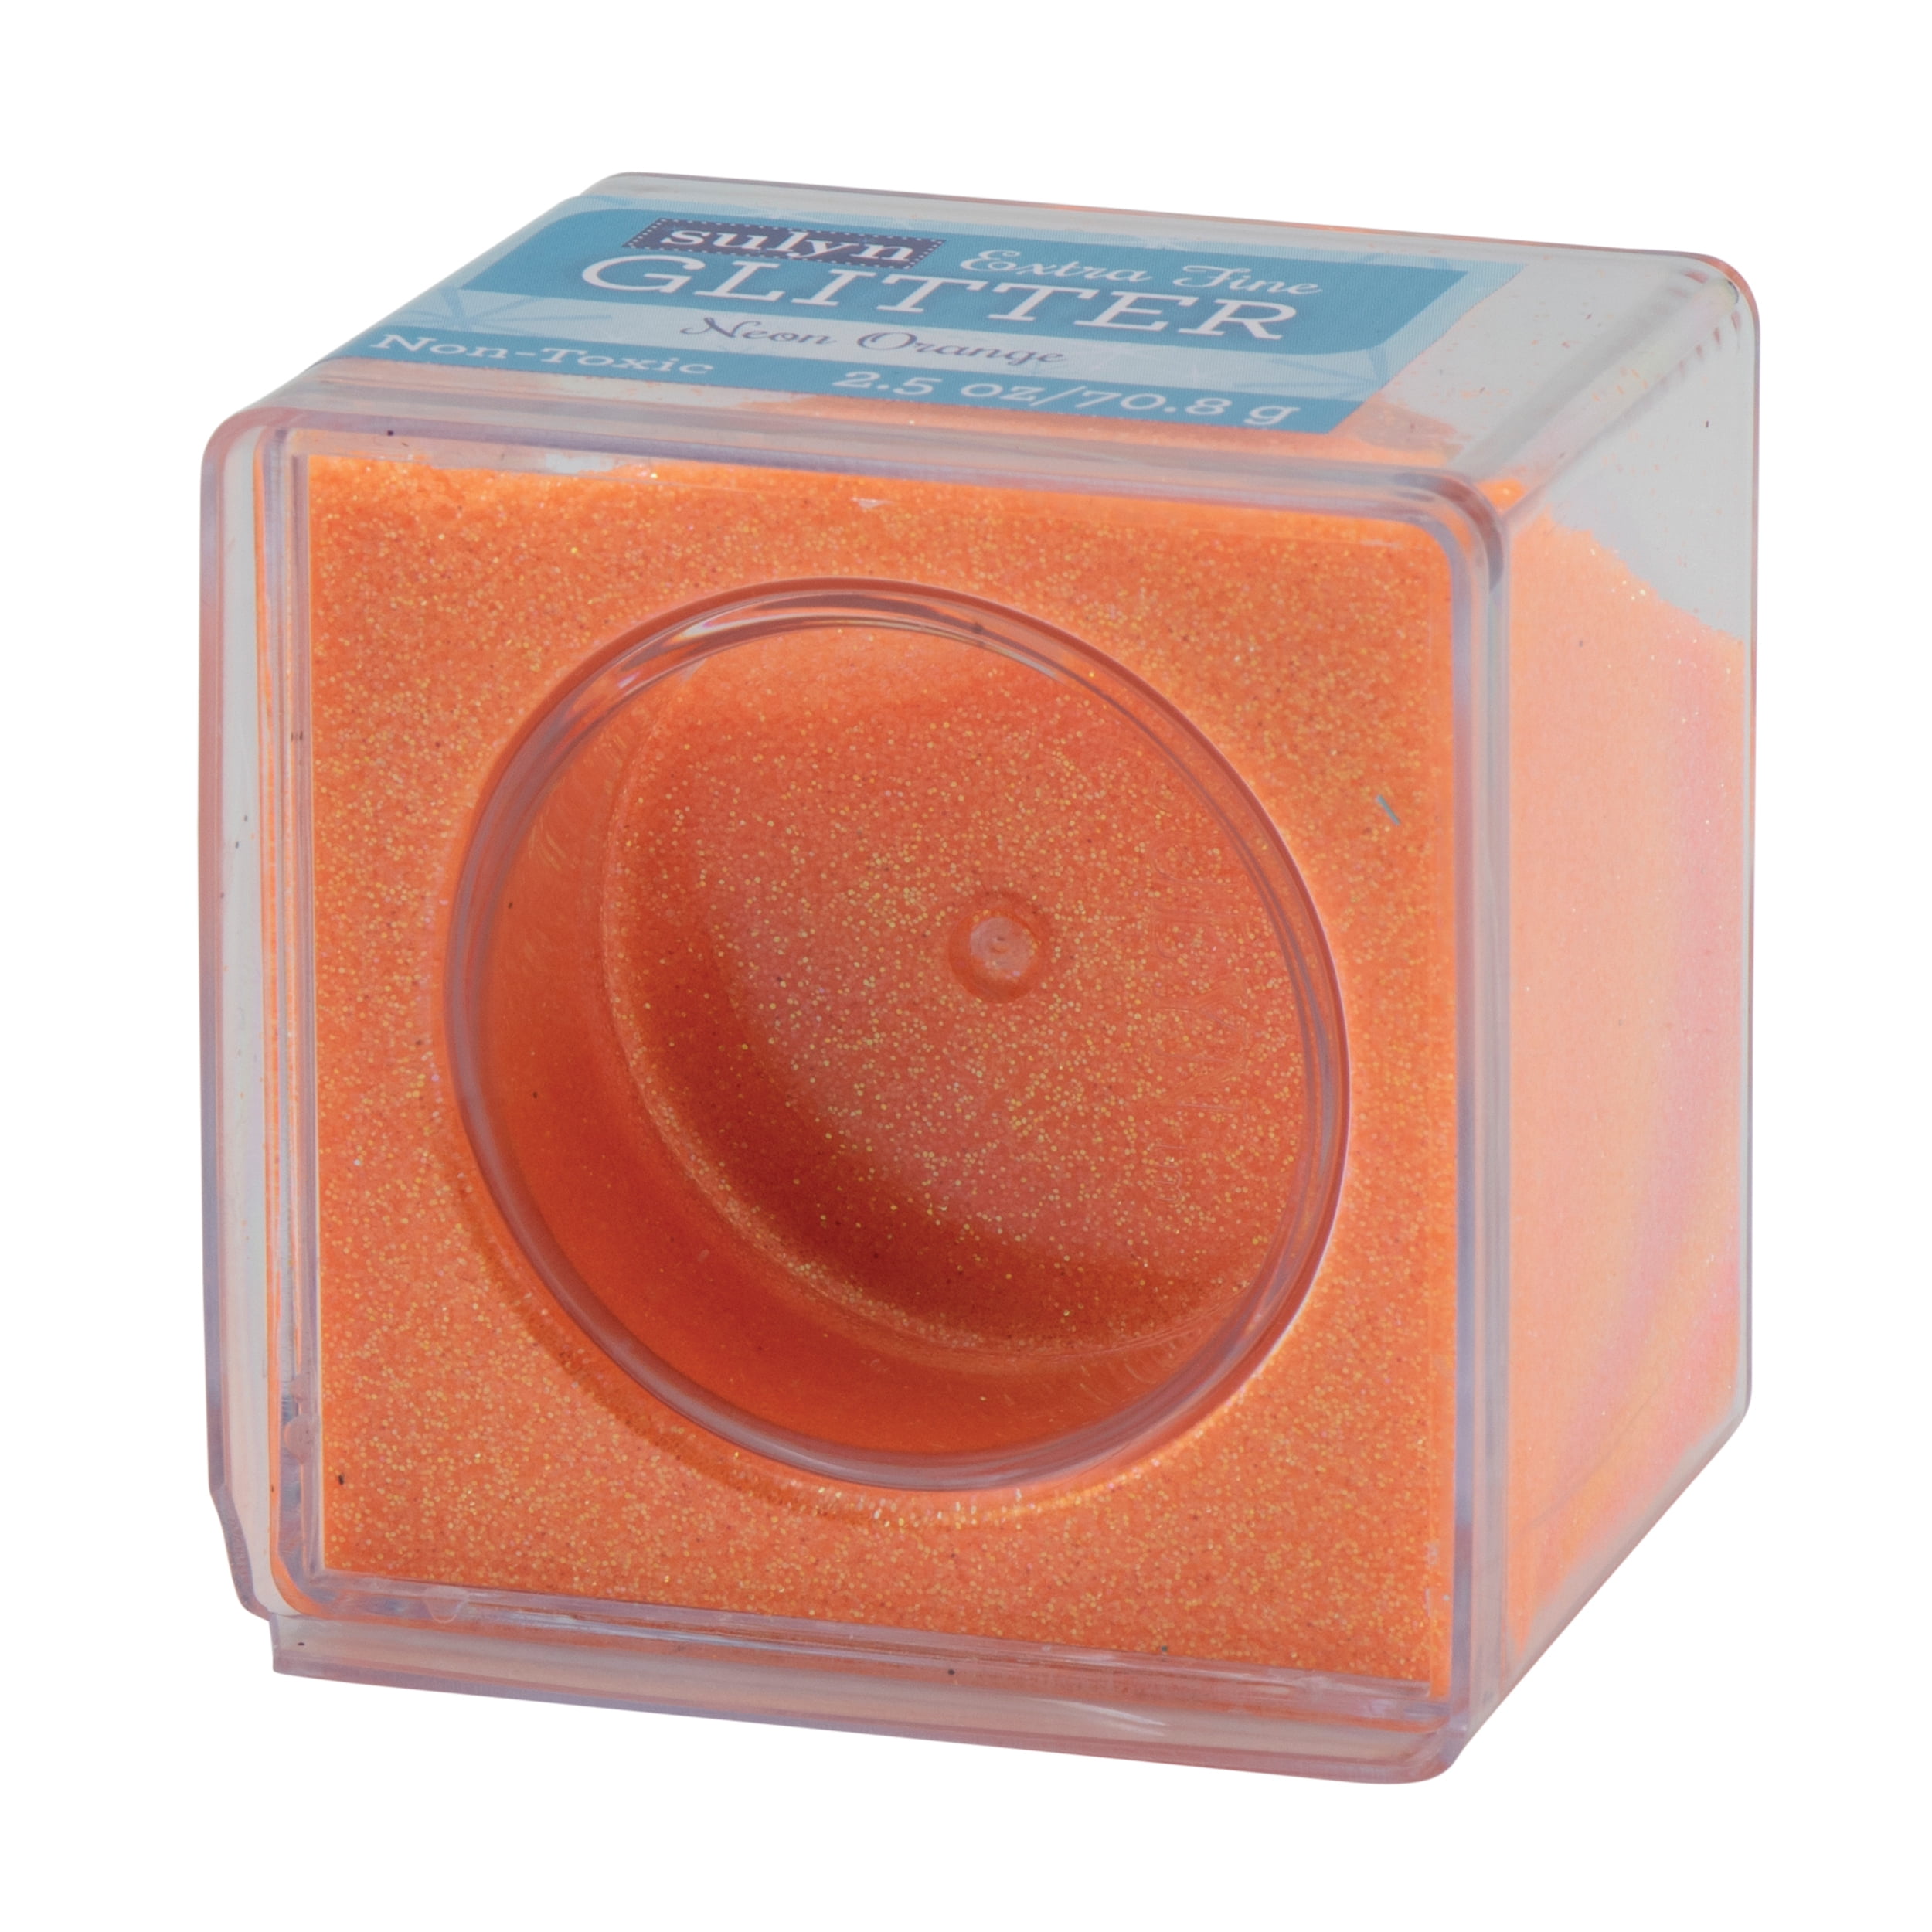 Sulyn Extra Fine Glitter for Crafts, Neon Orange, 2.5 oz 